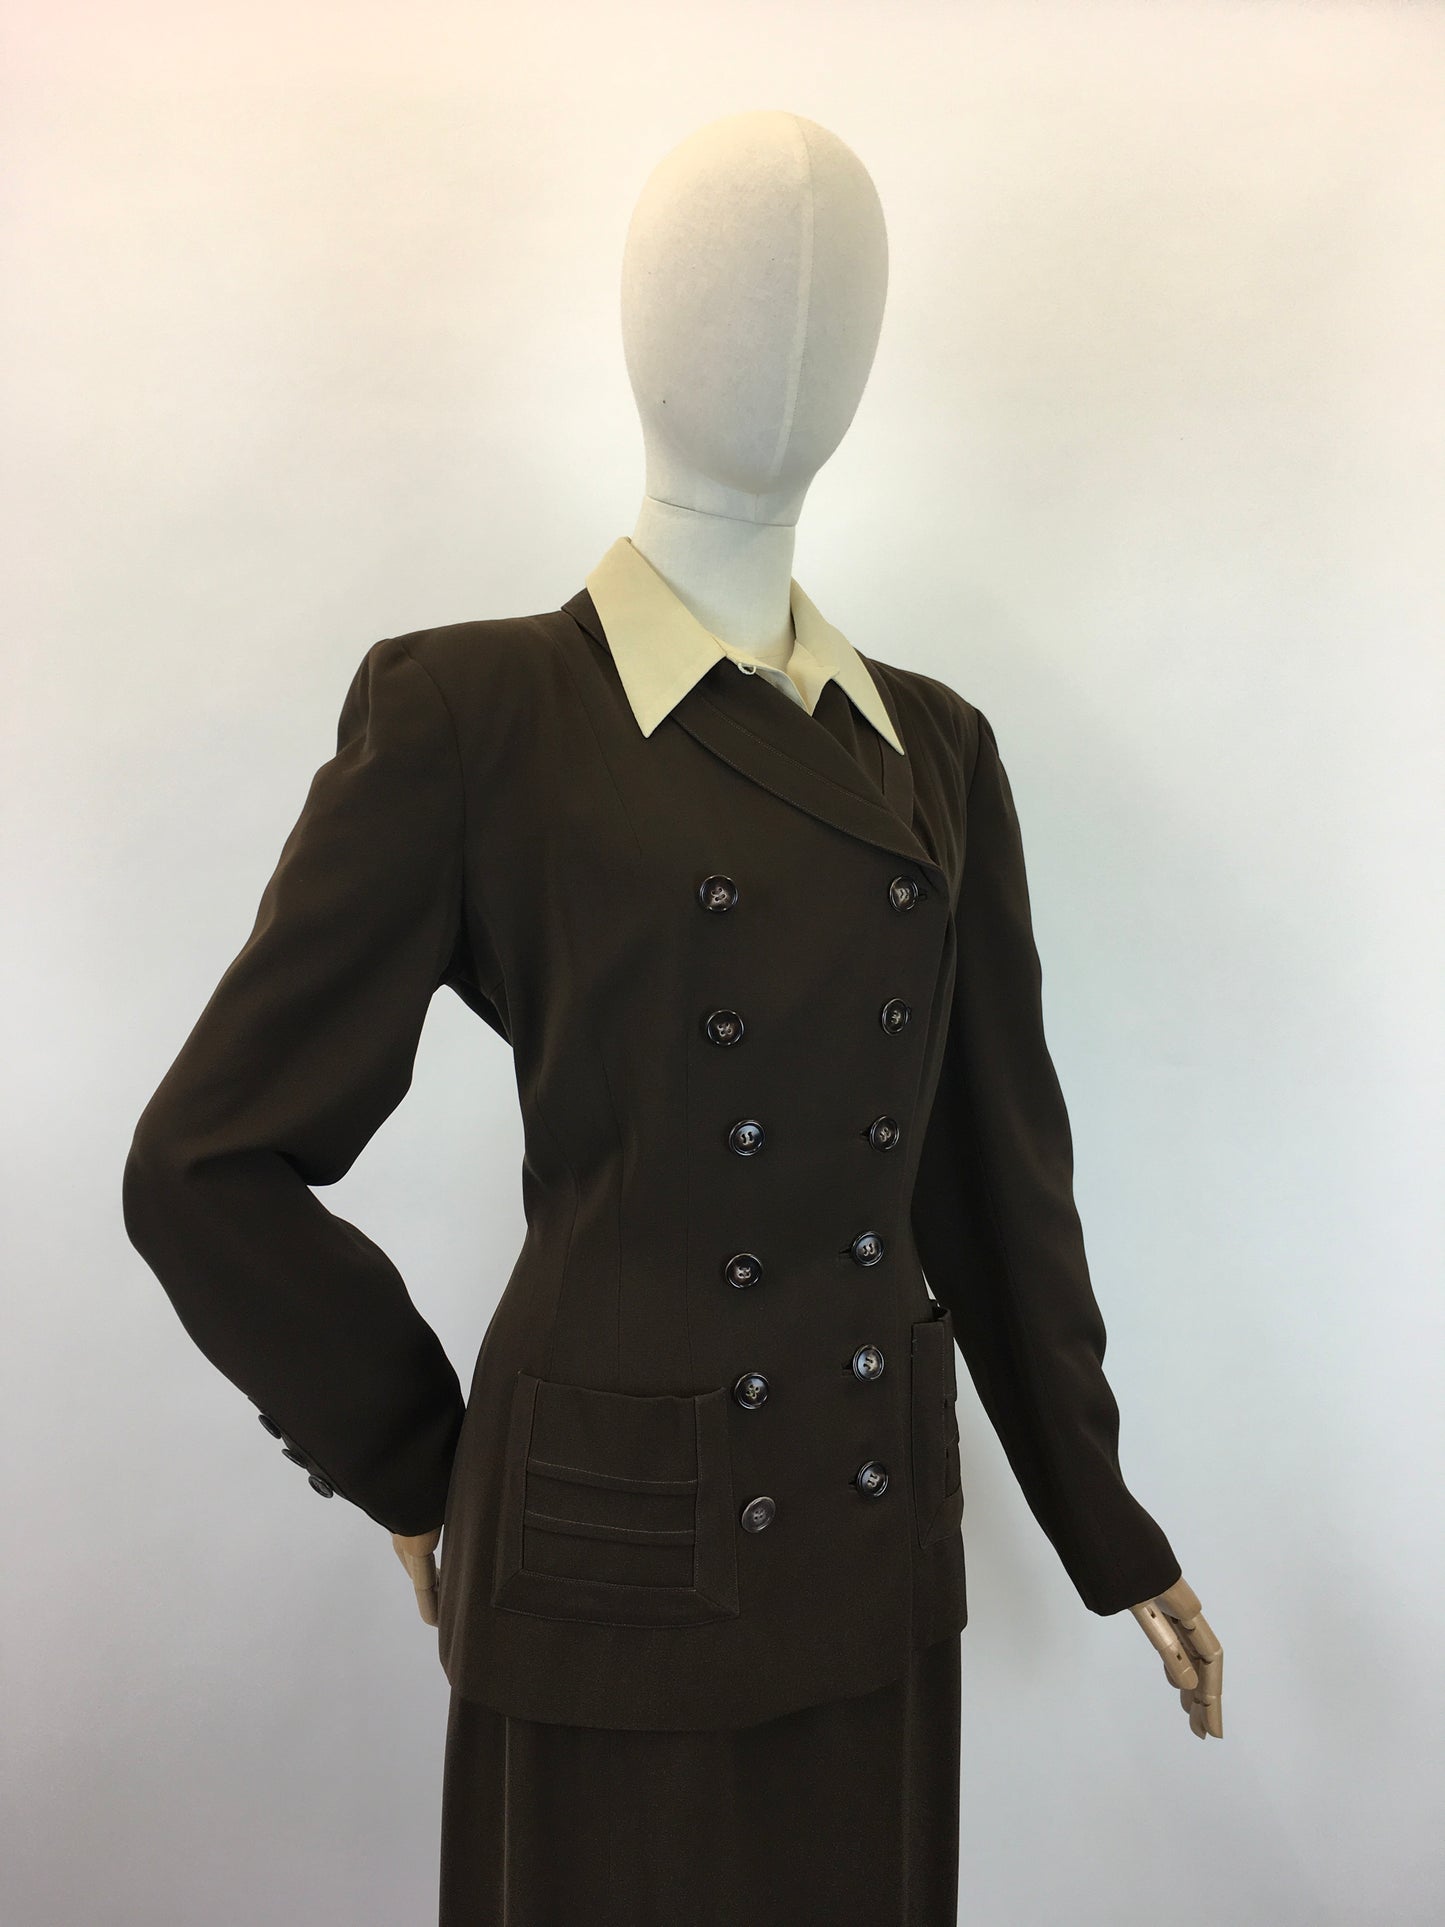 Original 1940's Sensational Chocolate Brown 2pc Suit - With Exquisite Detailing